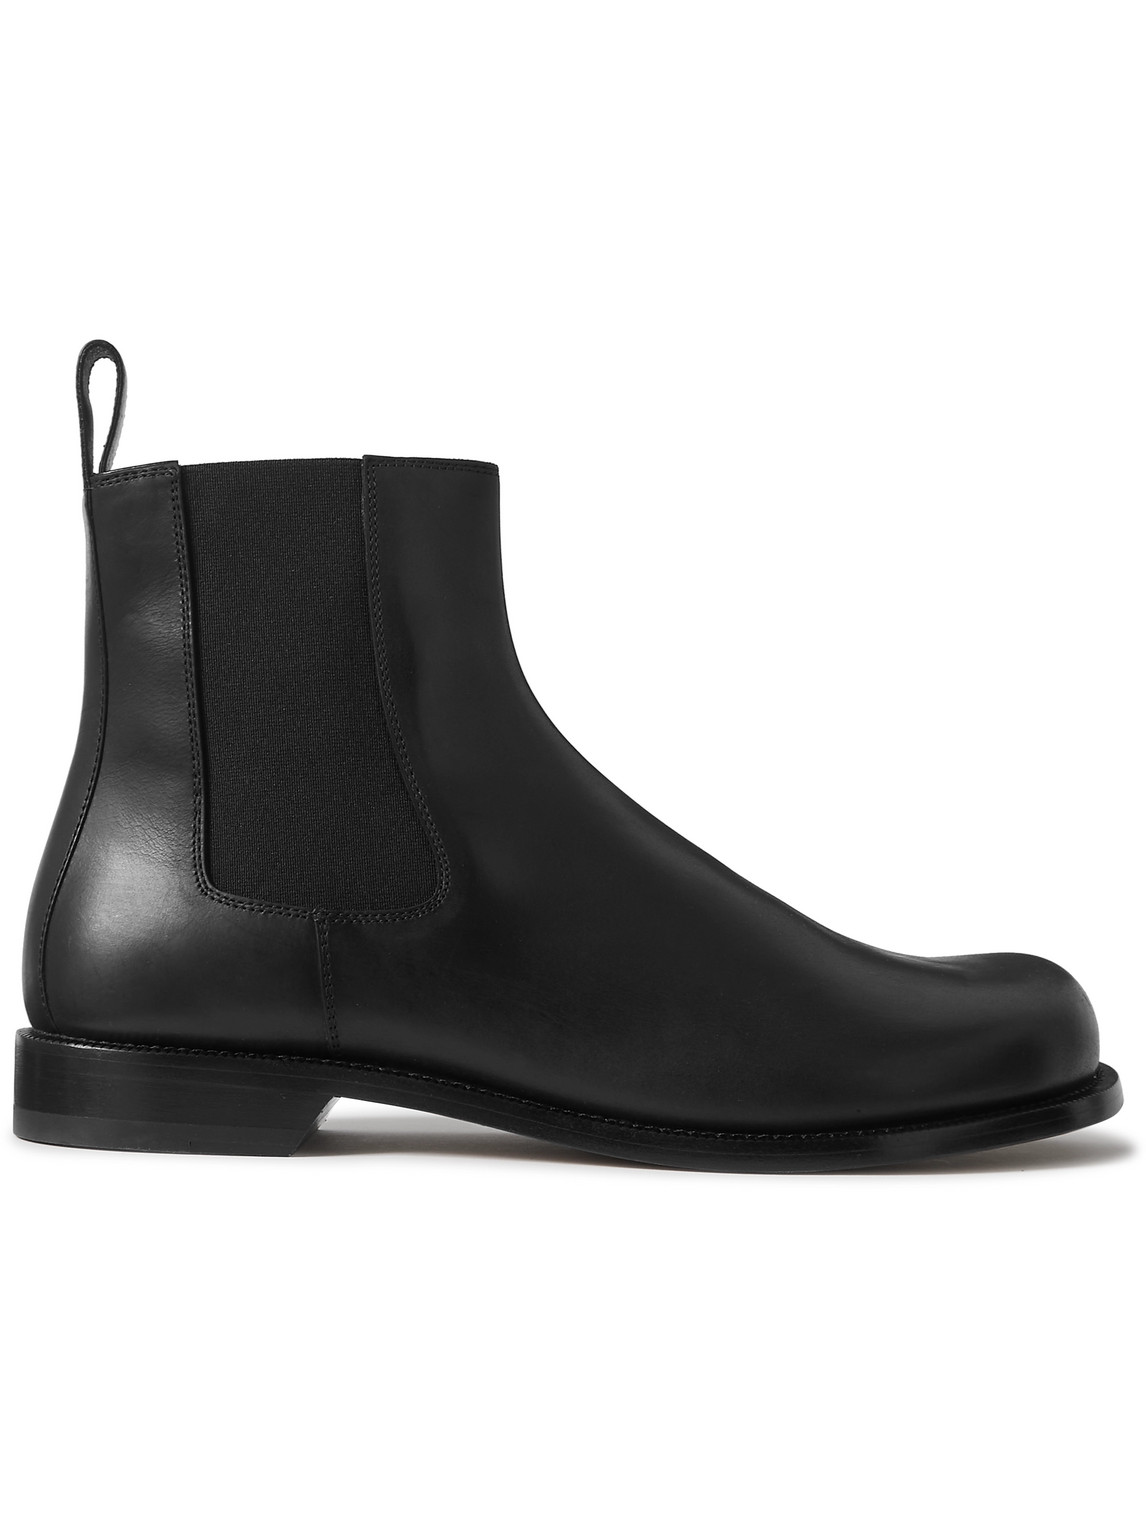 LOEWE - Campo Leather Chelsea Boots - Men - Black - EU 45 von LOEWE